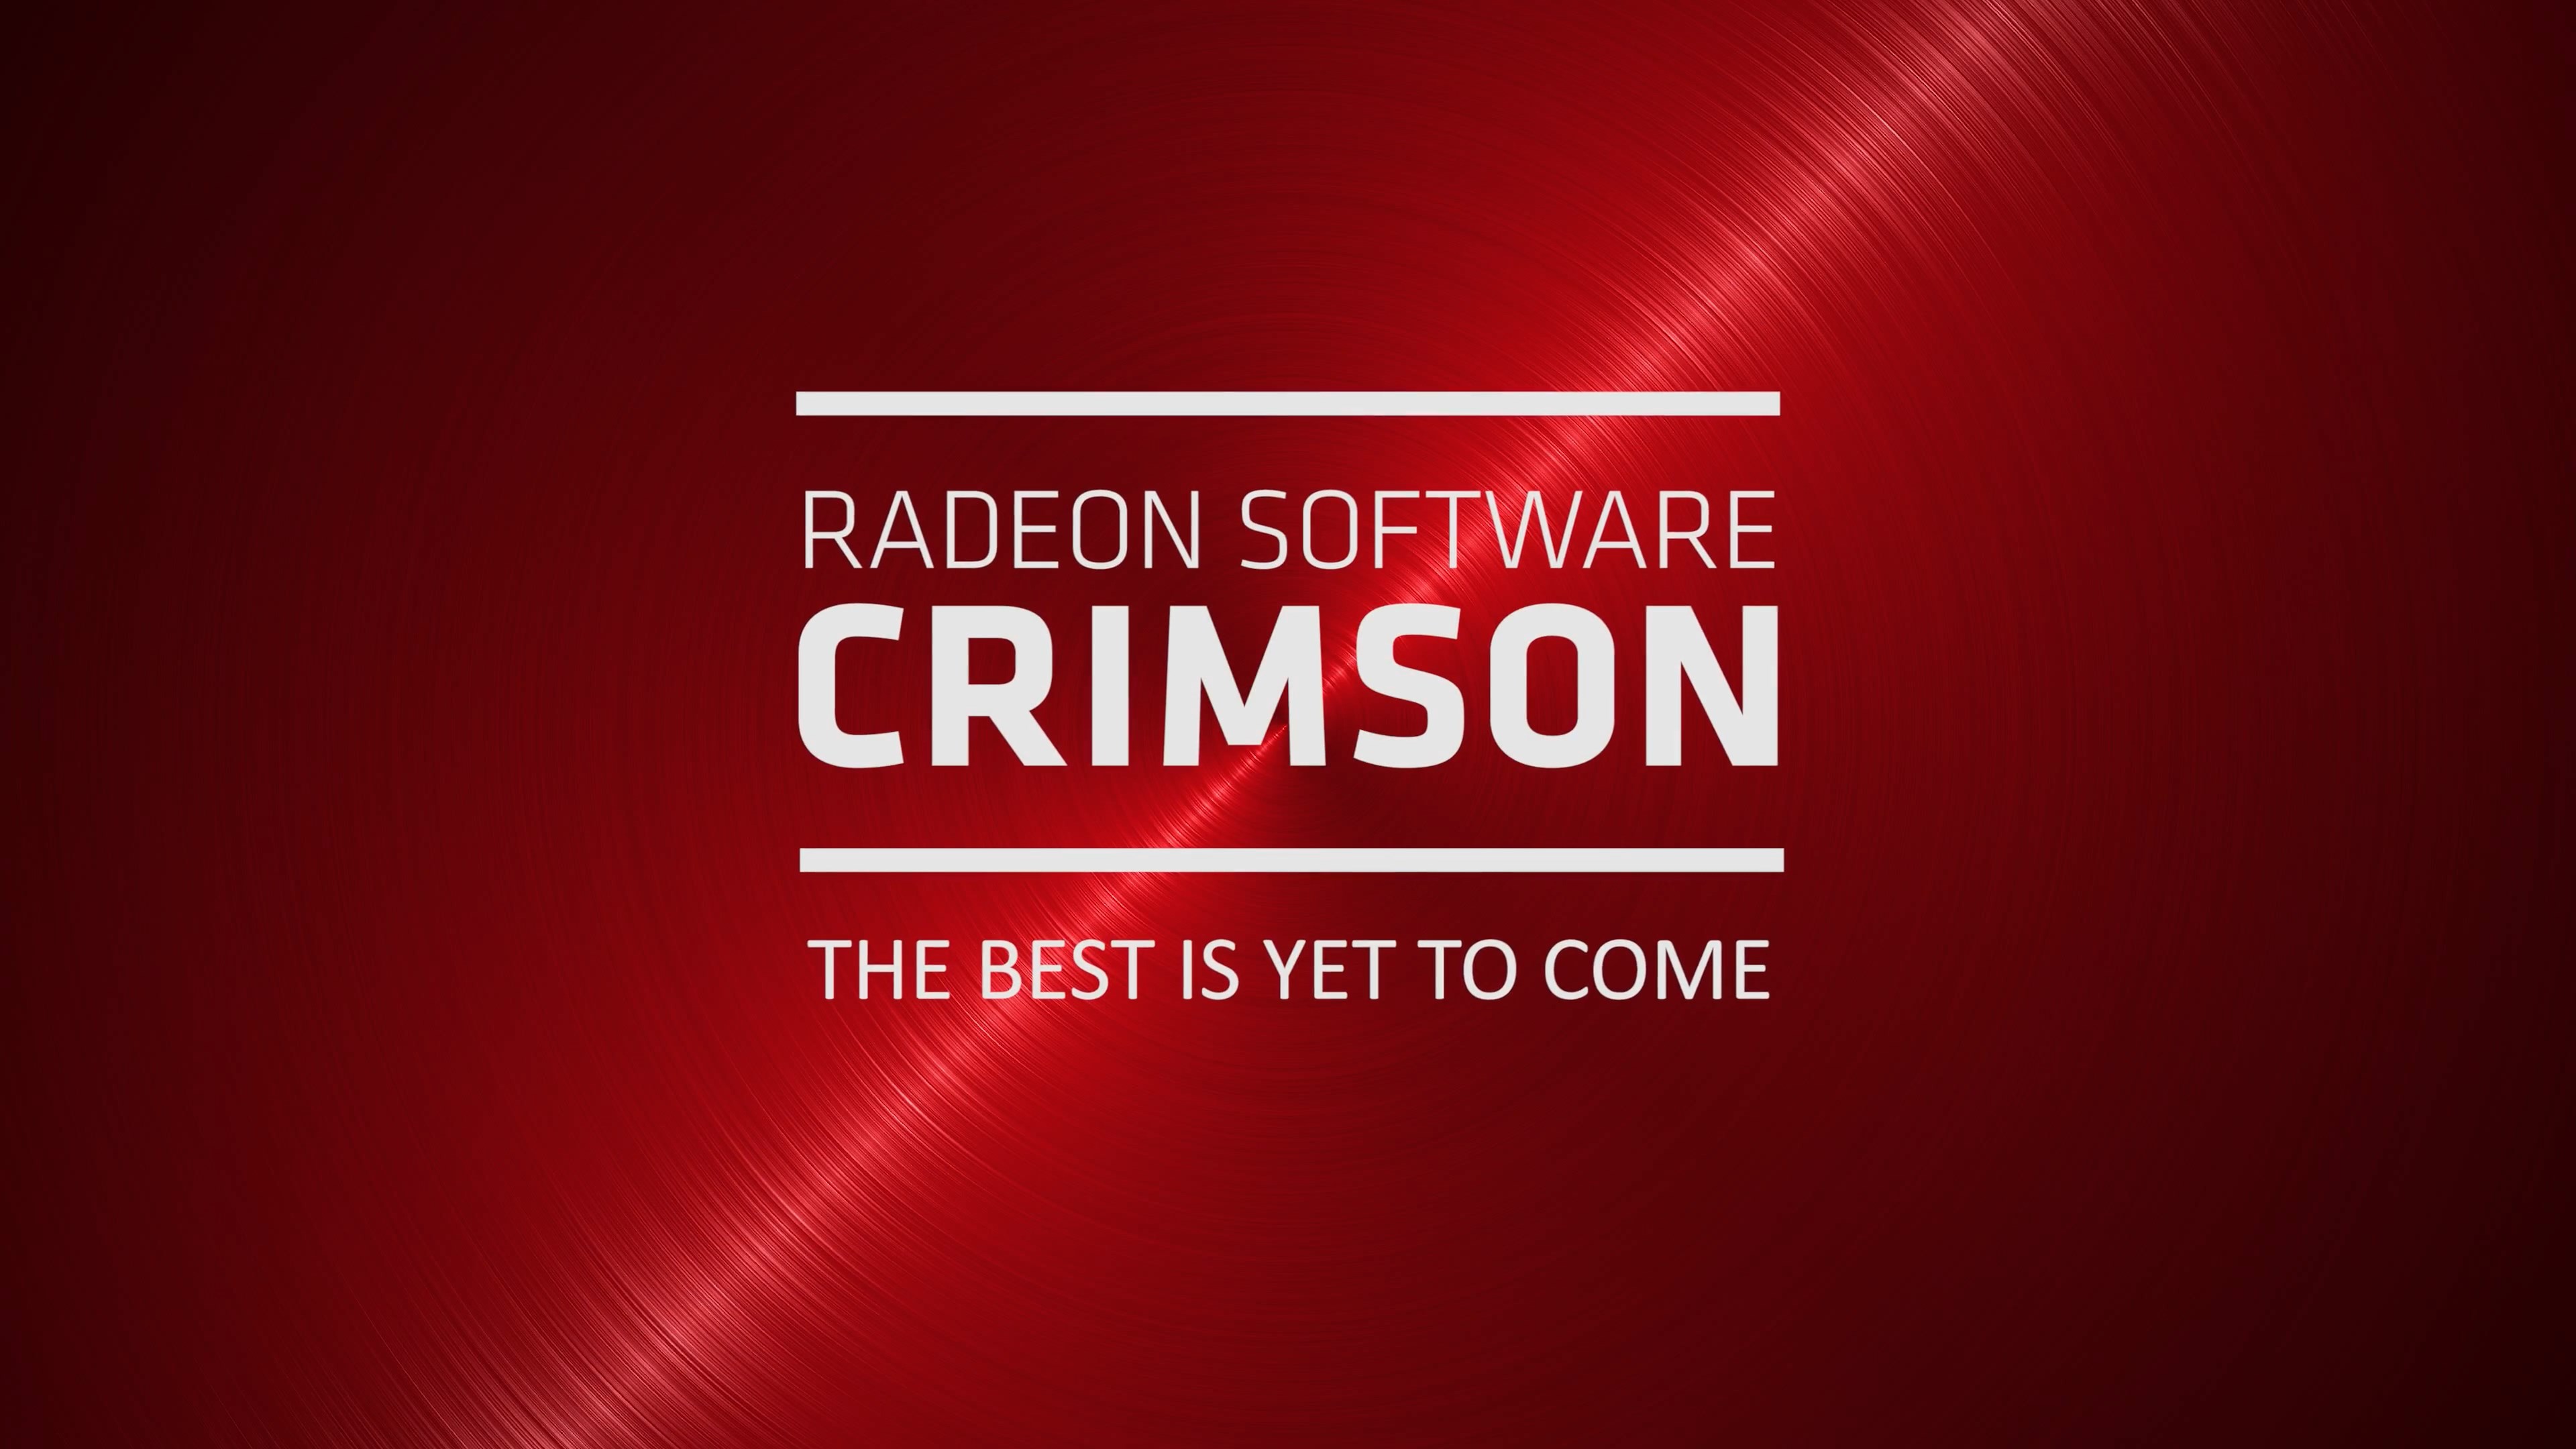 RIP AMD Catalyst, welcome Radeon Software : Crimson Edition 27